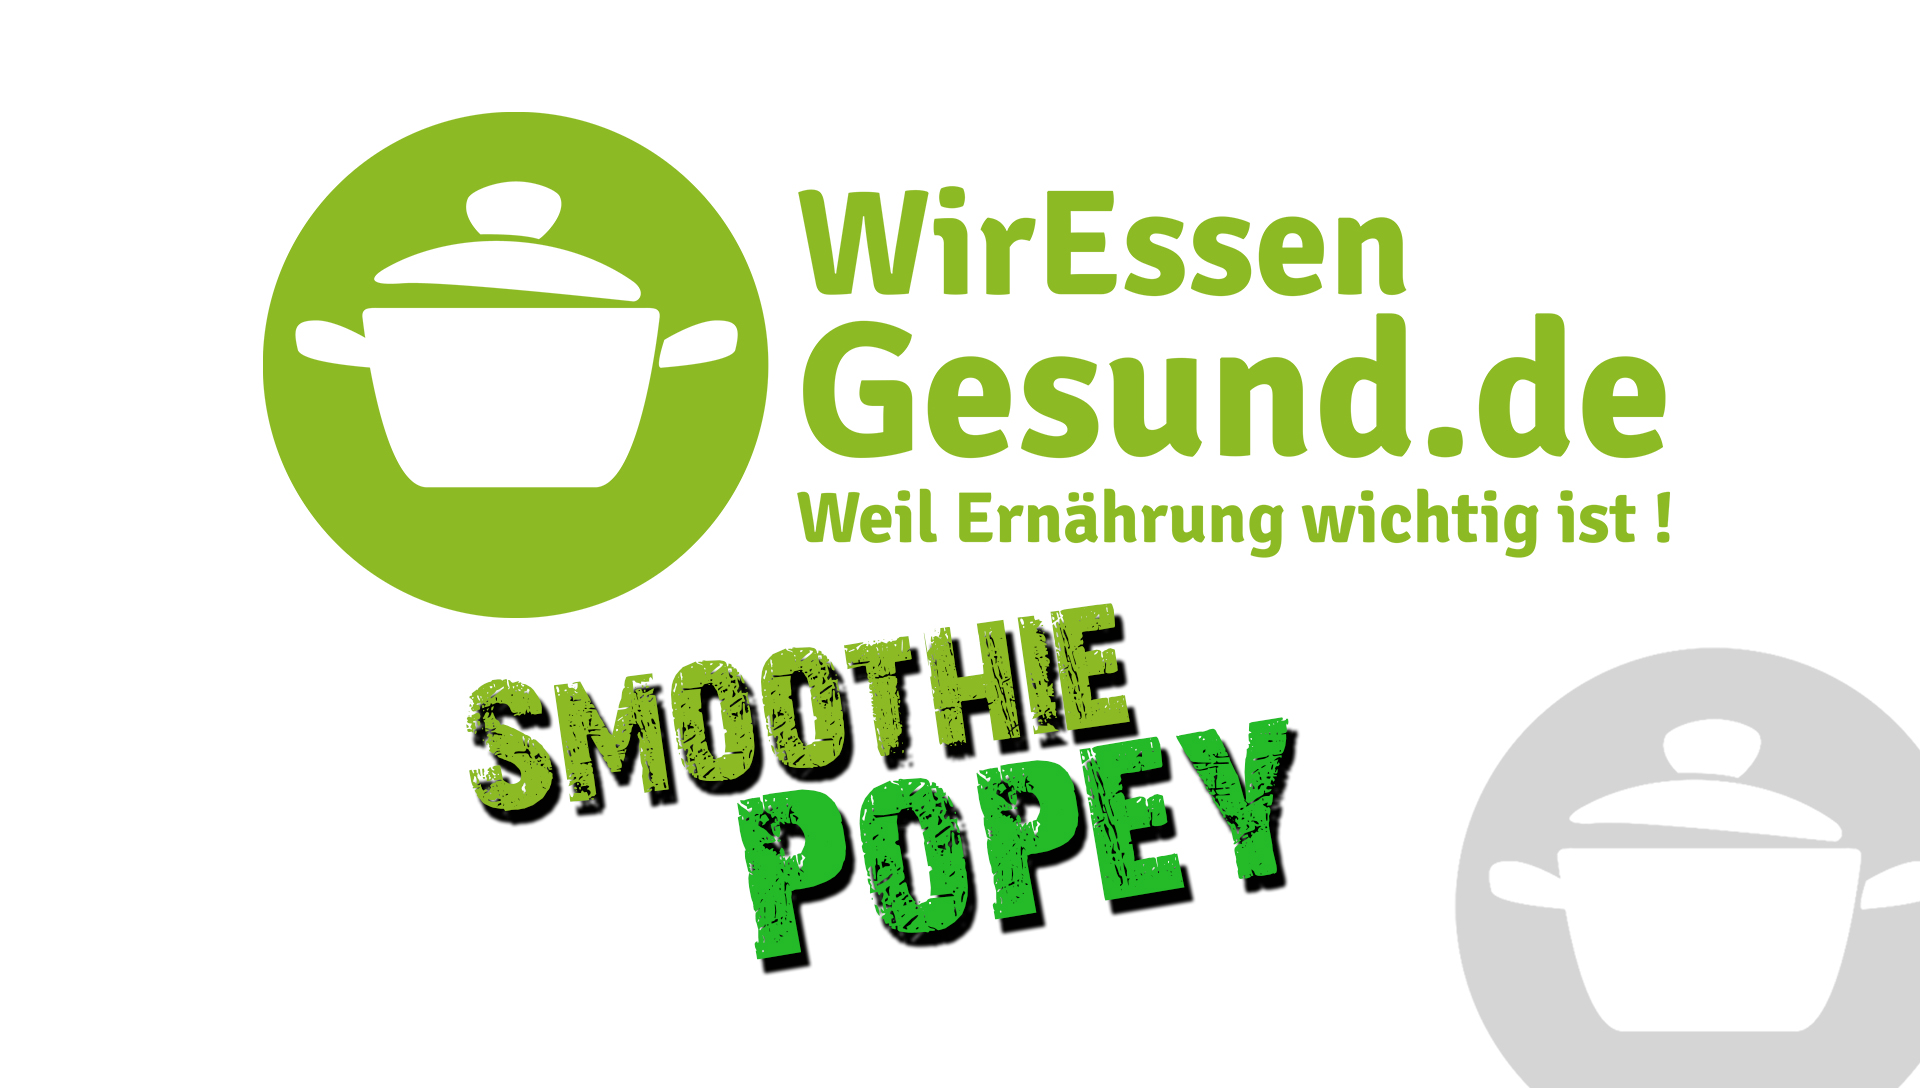 Grüner Smoothie Rezept - Popey